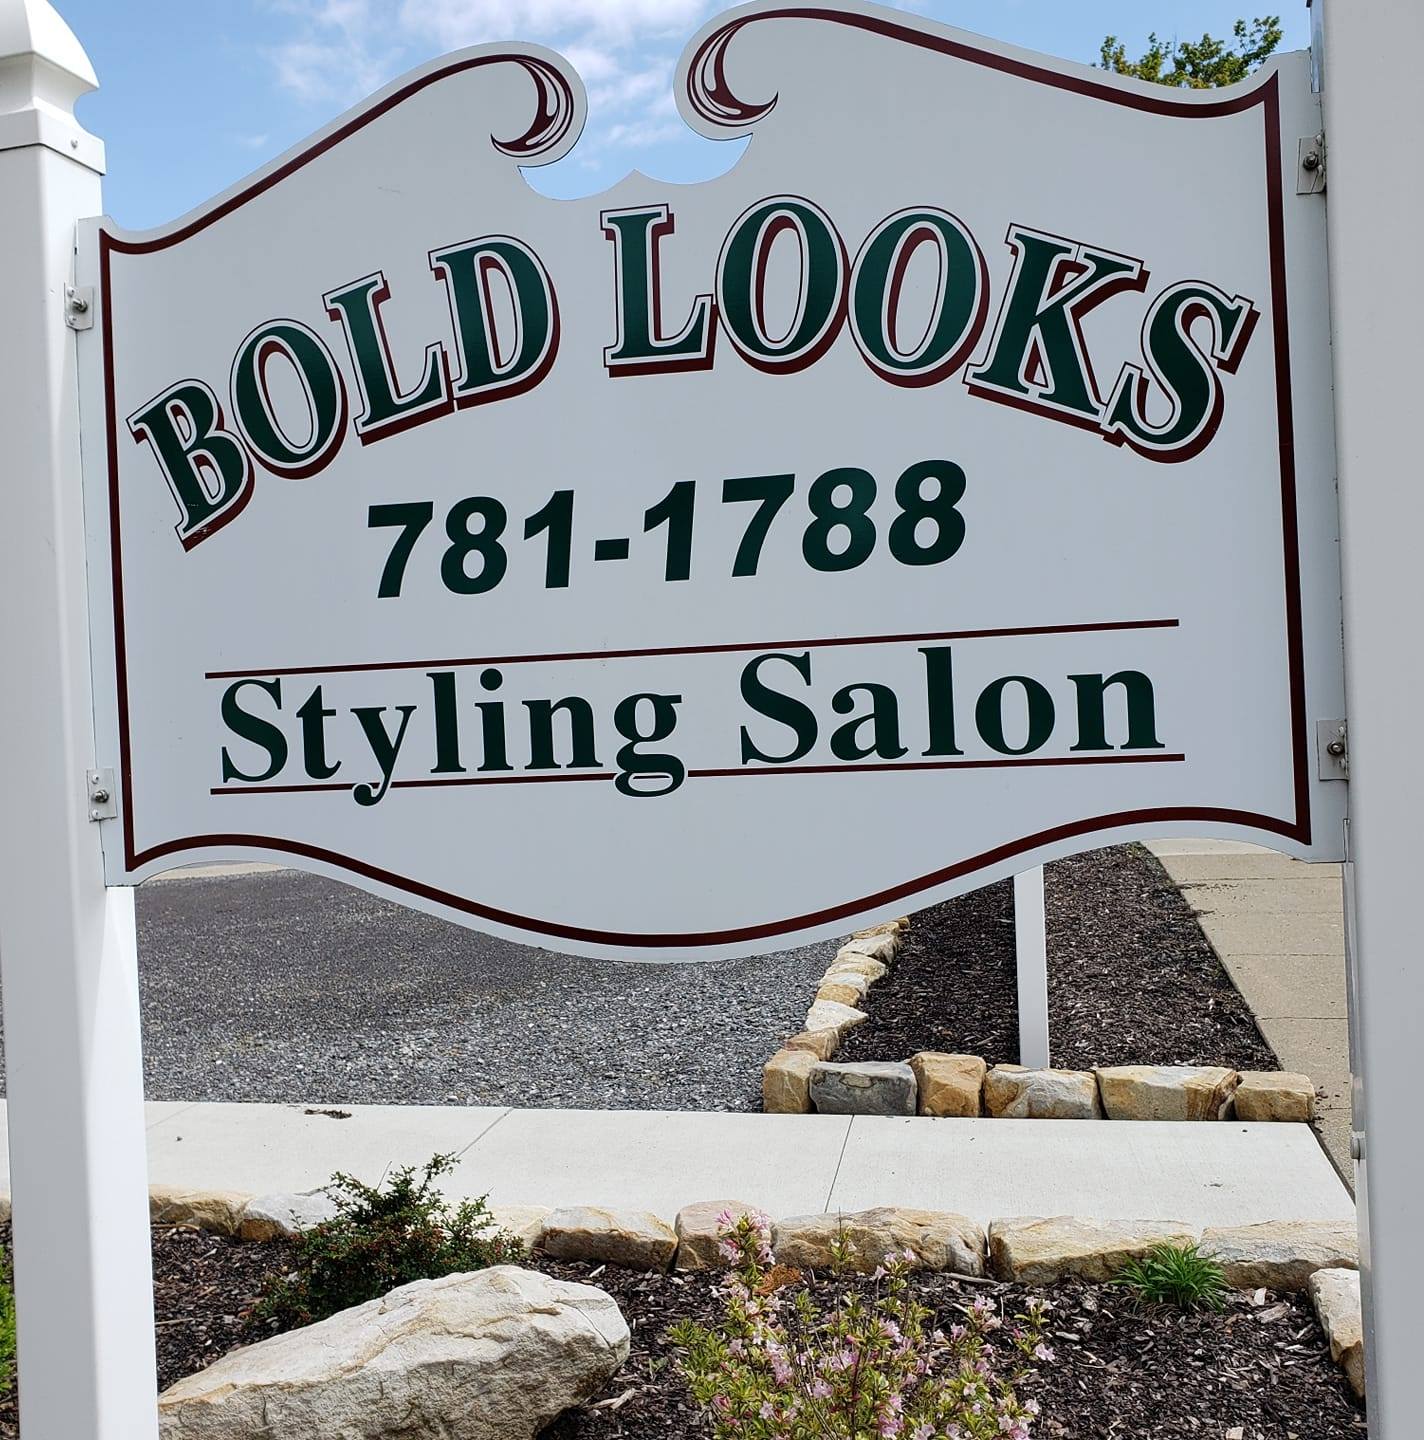 Bold Looks Styling Salon